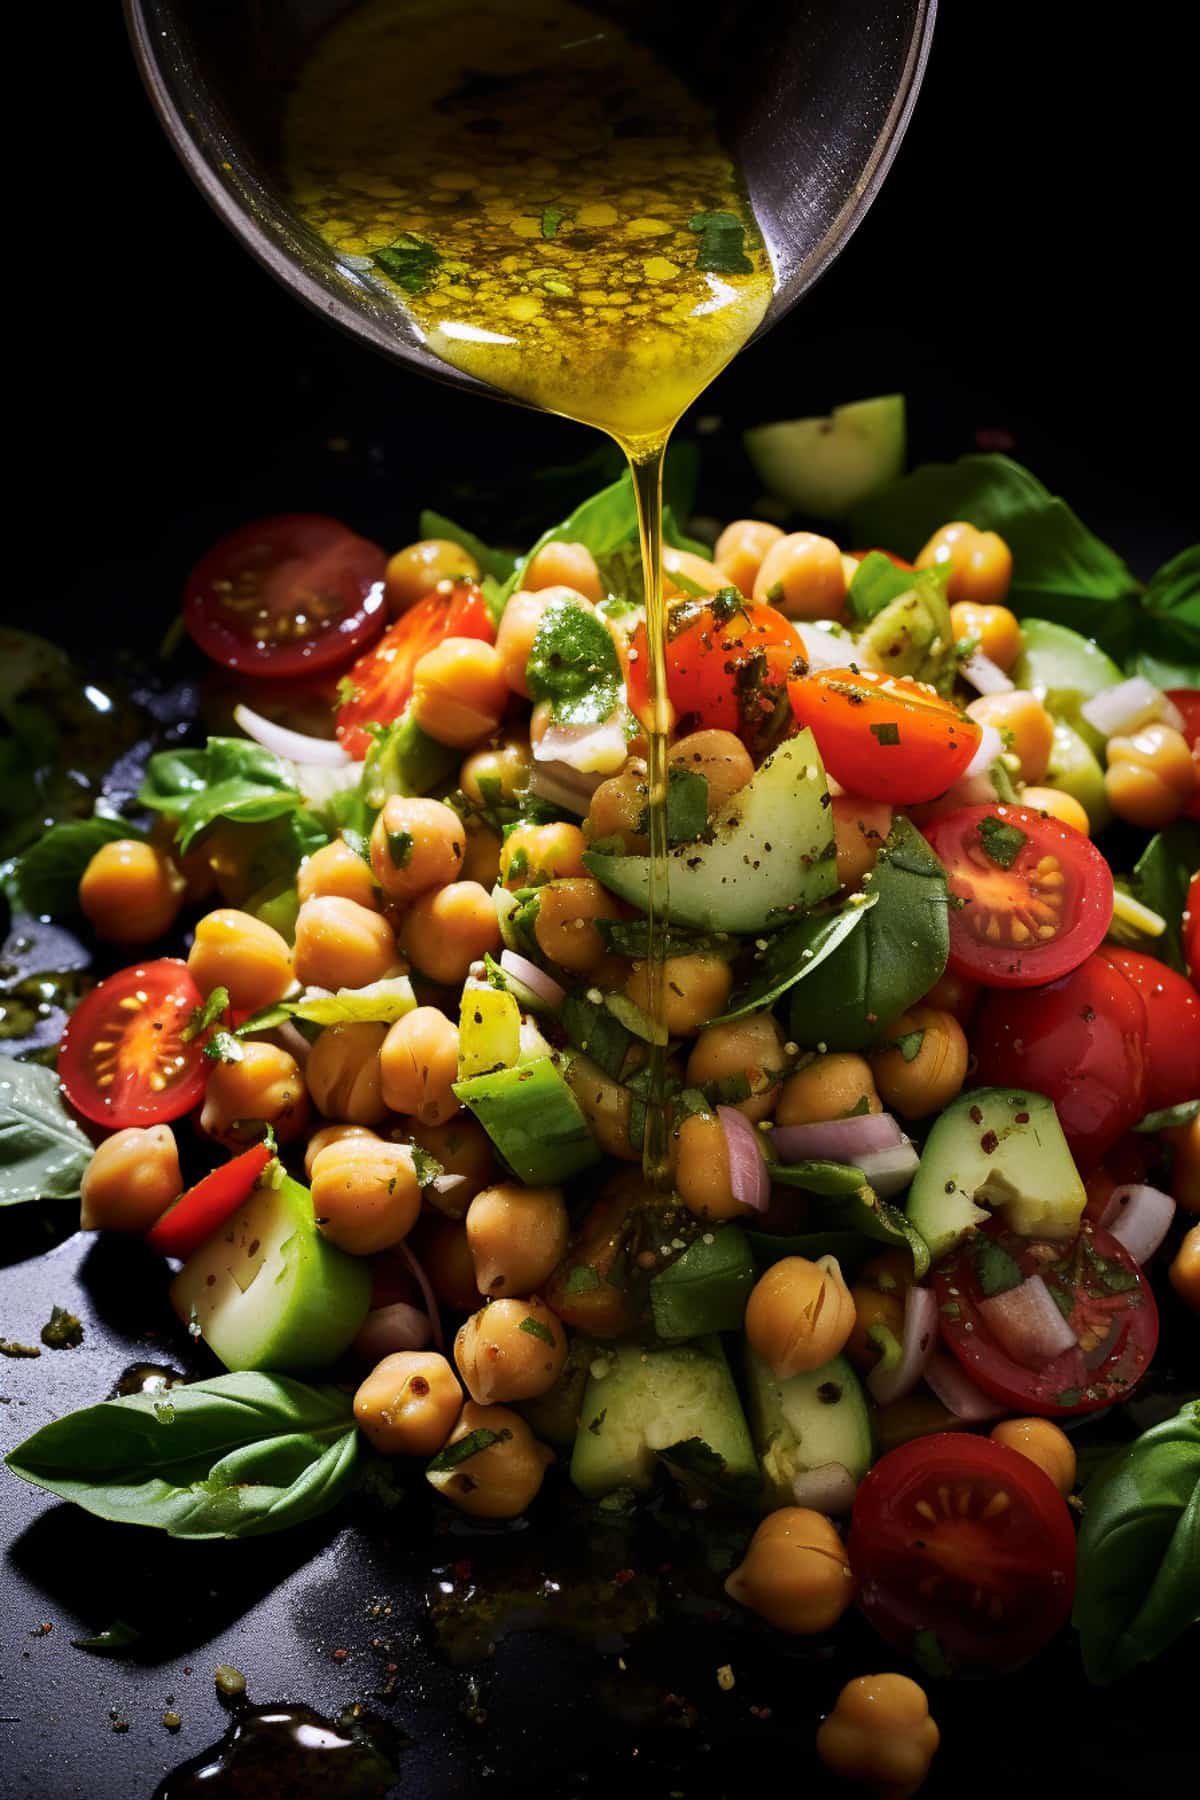 Chickpea Salad with olive oil vinaigrette dressing.